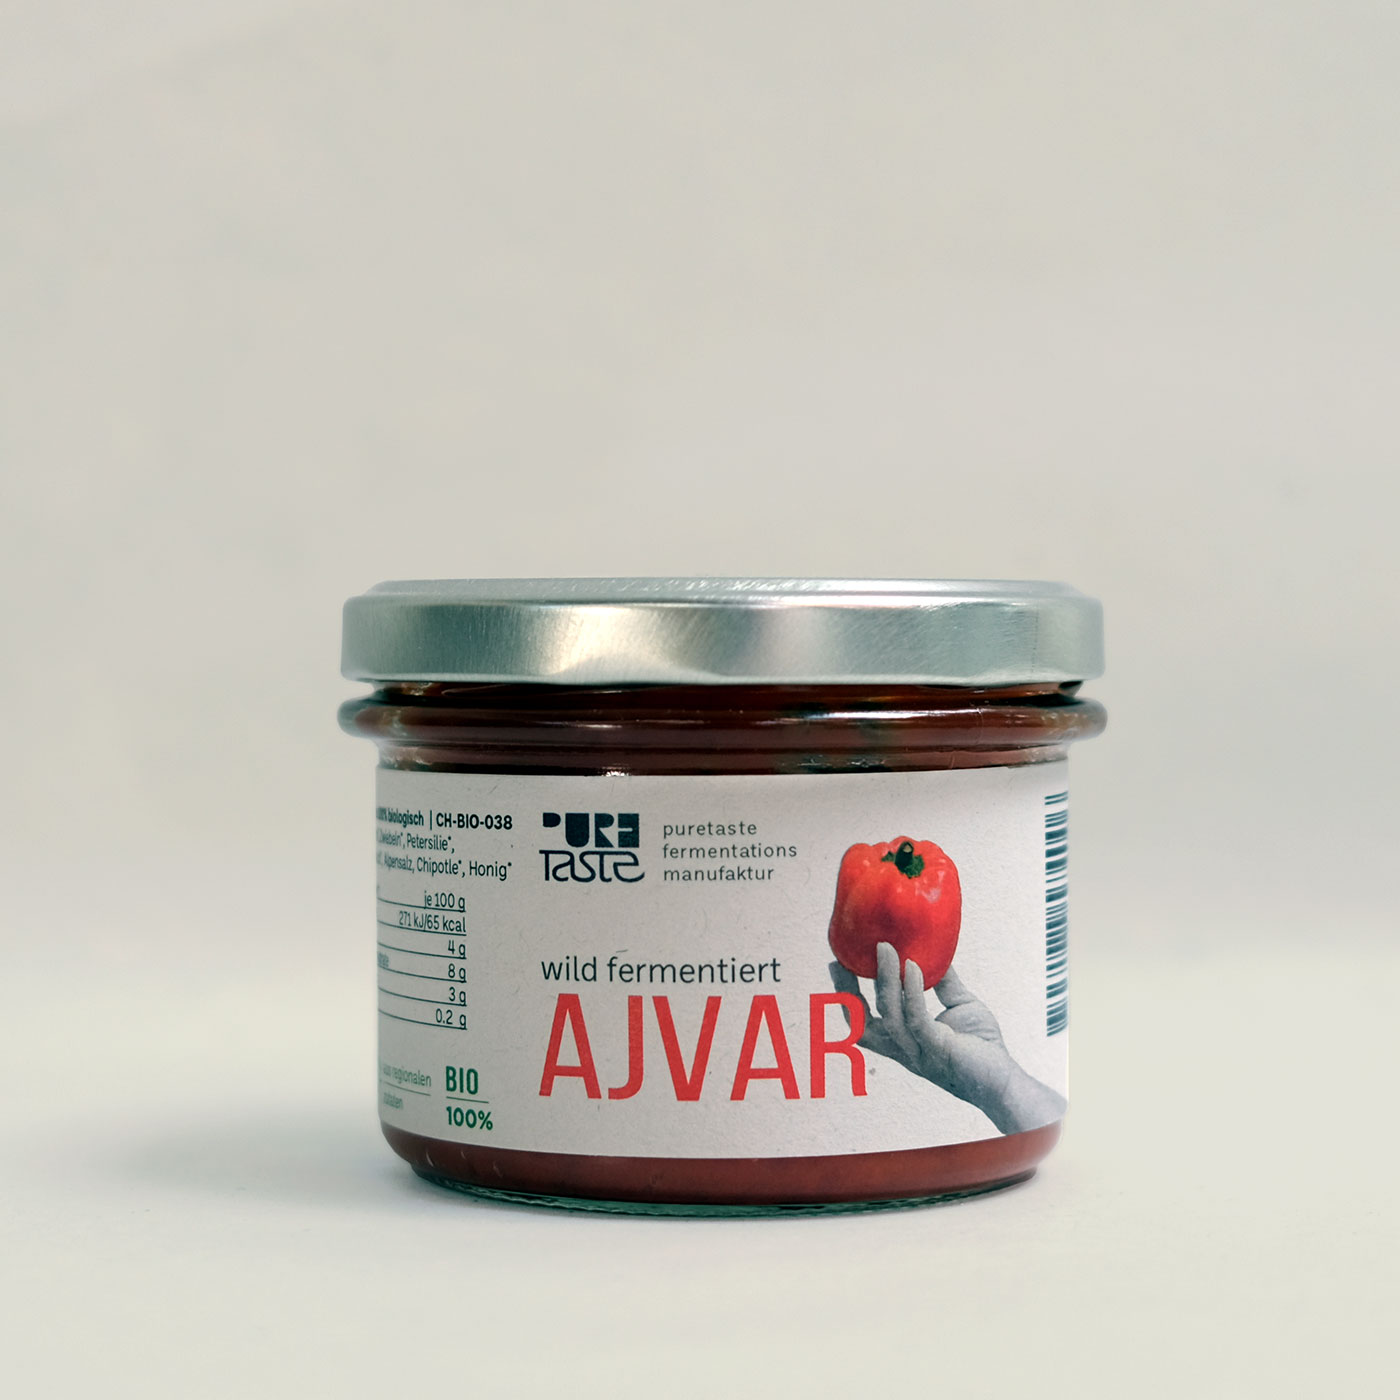 Ajvar, fermentierte Peperoni aus der Region